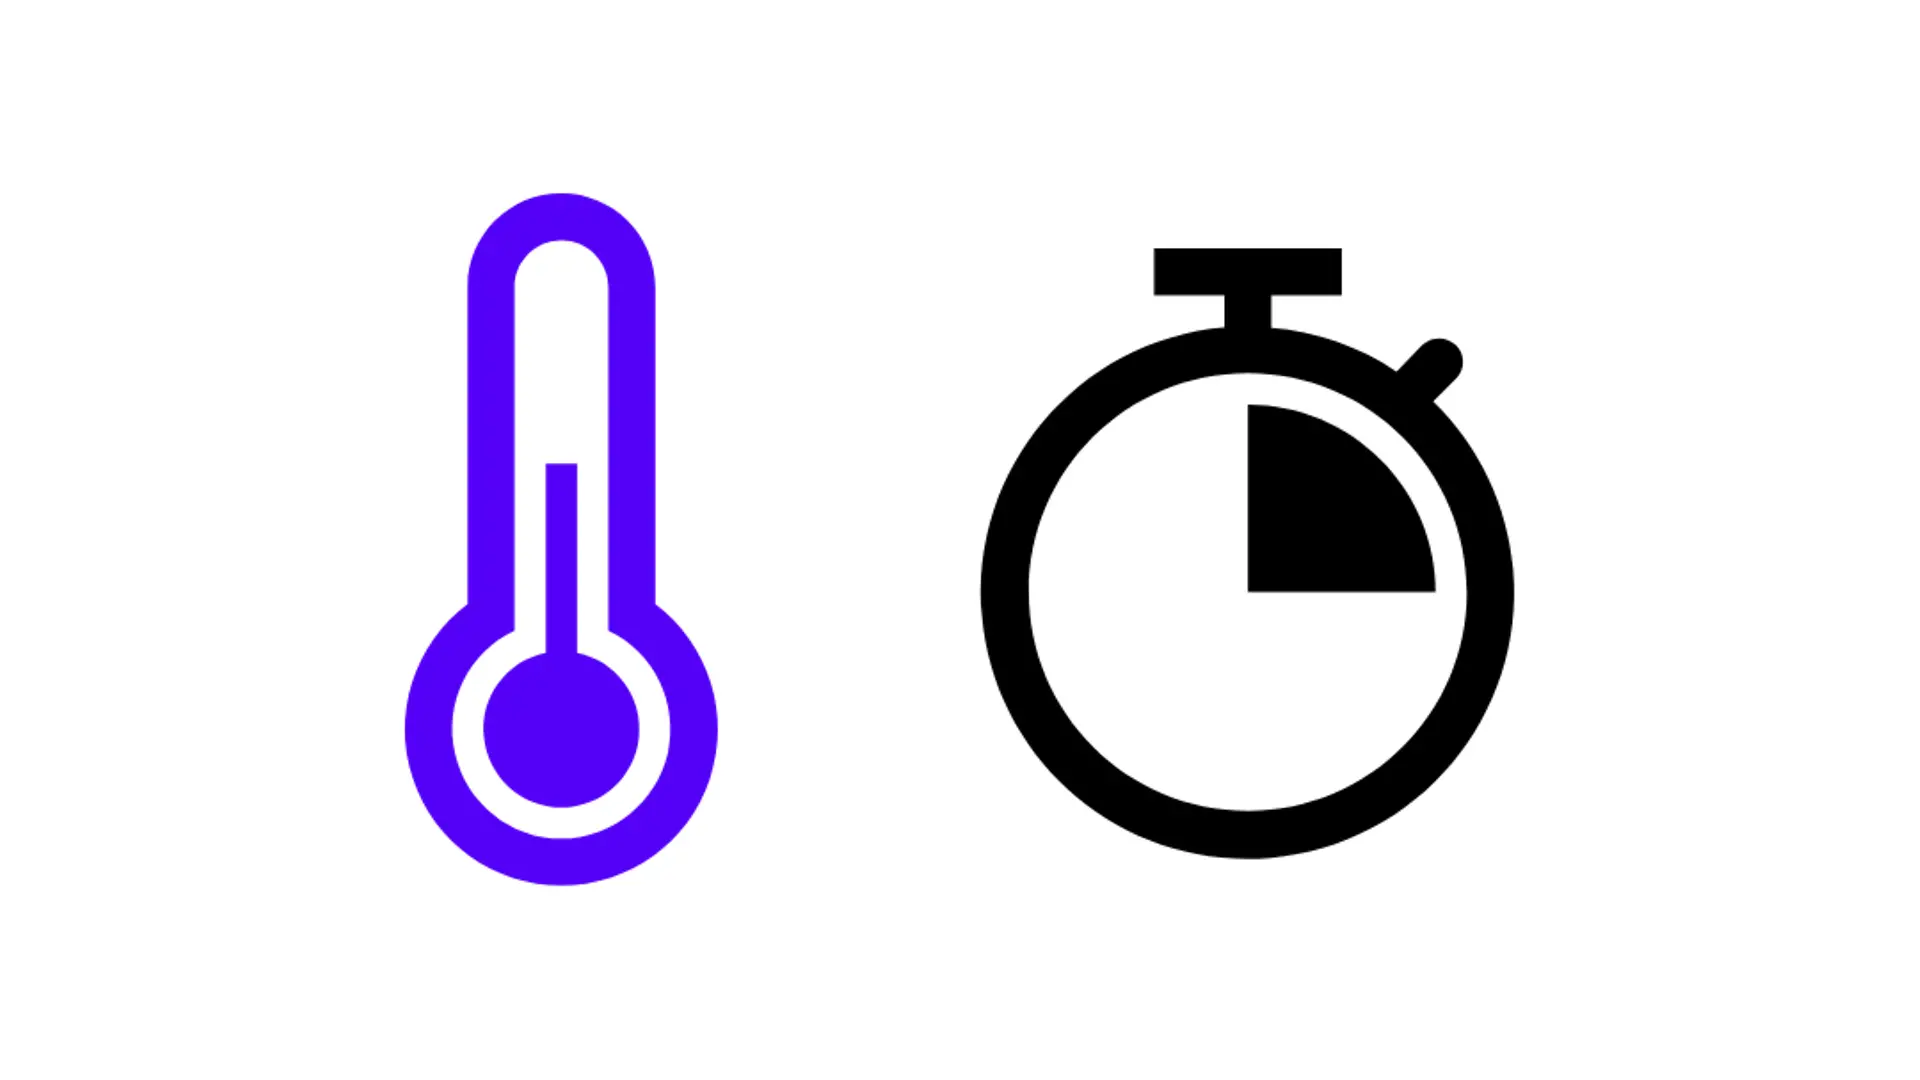 niebieski symbol termometru i symbol zegara, kwadrans